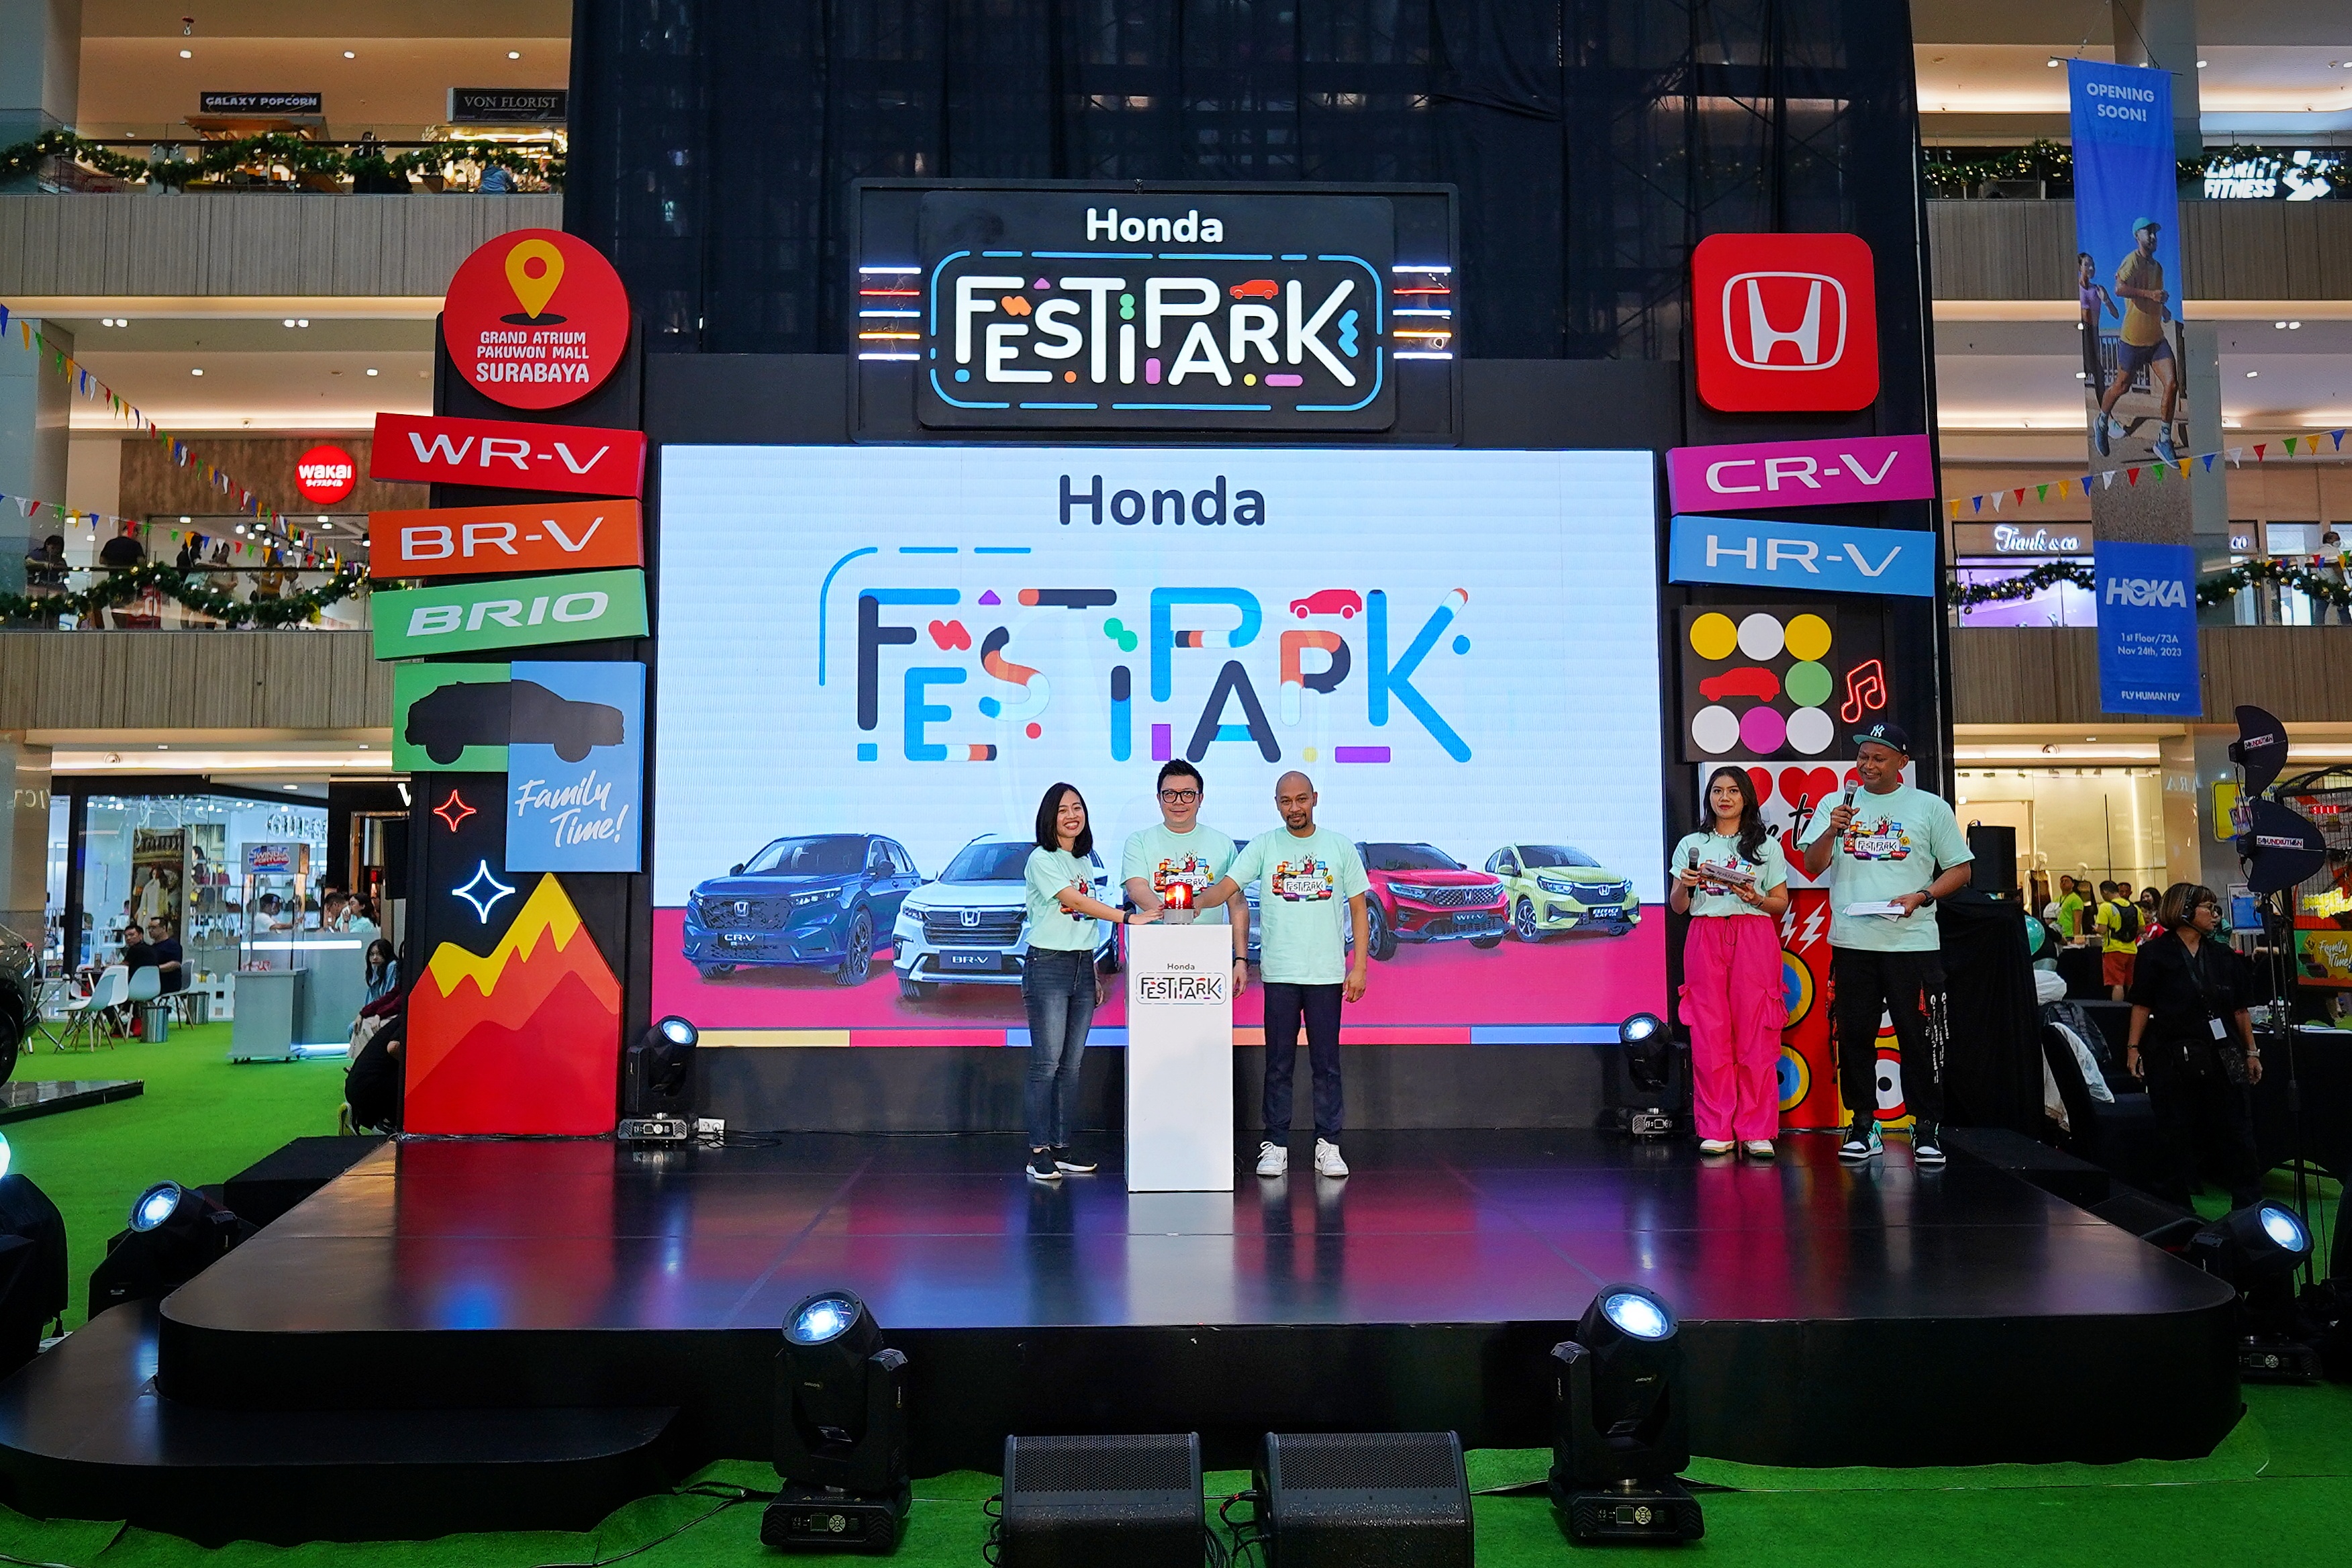 Honda FESTIPARK Surabaya